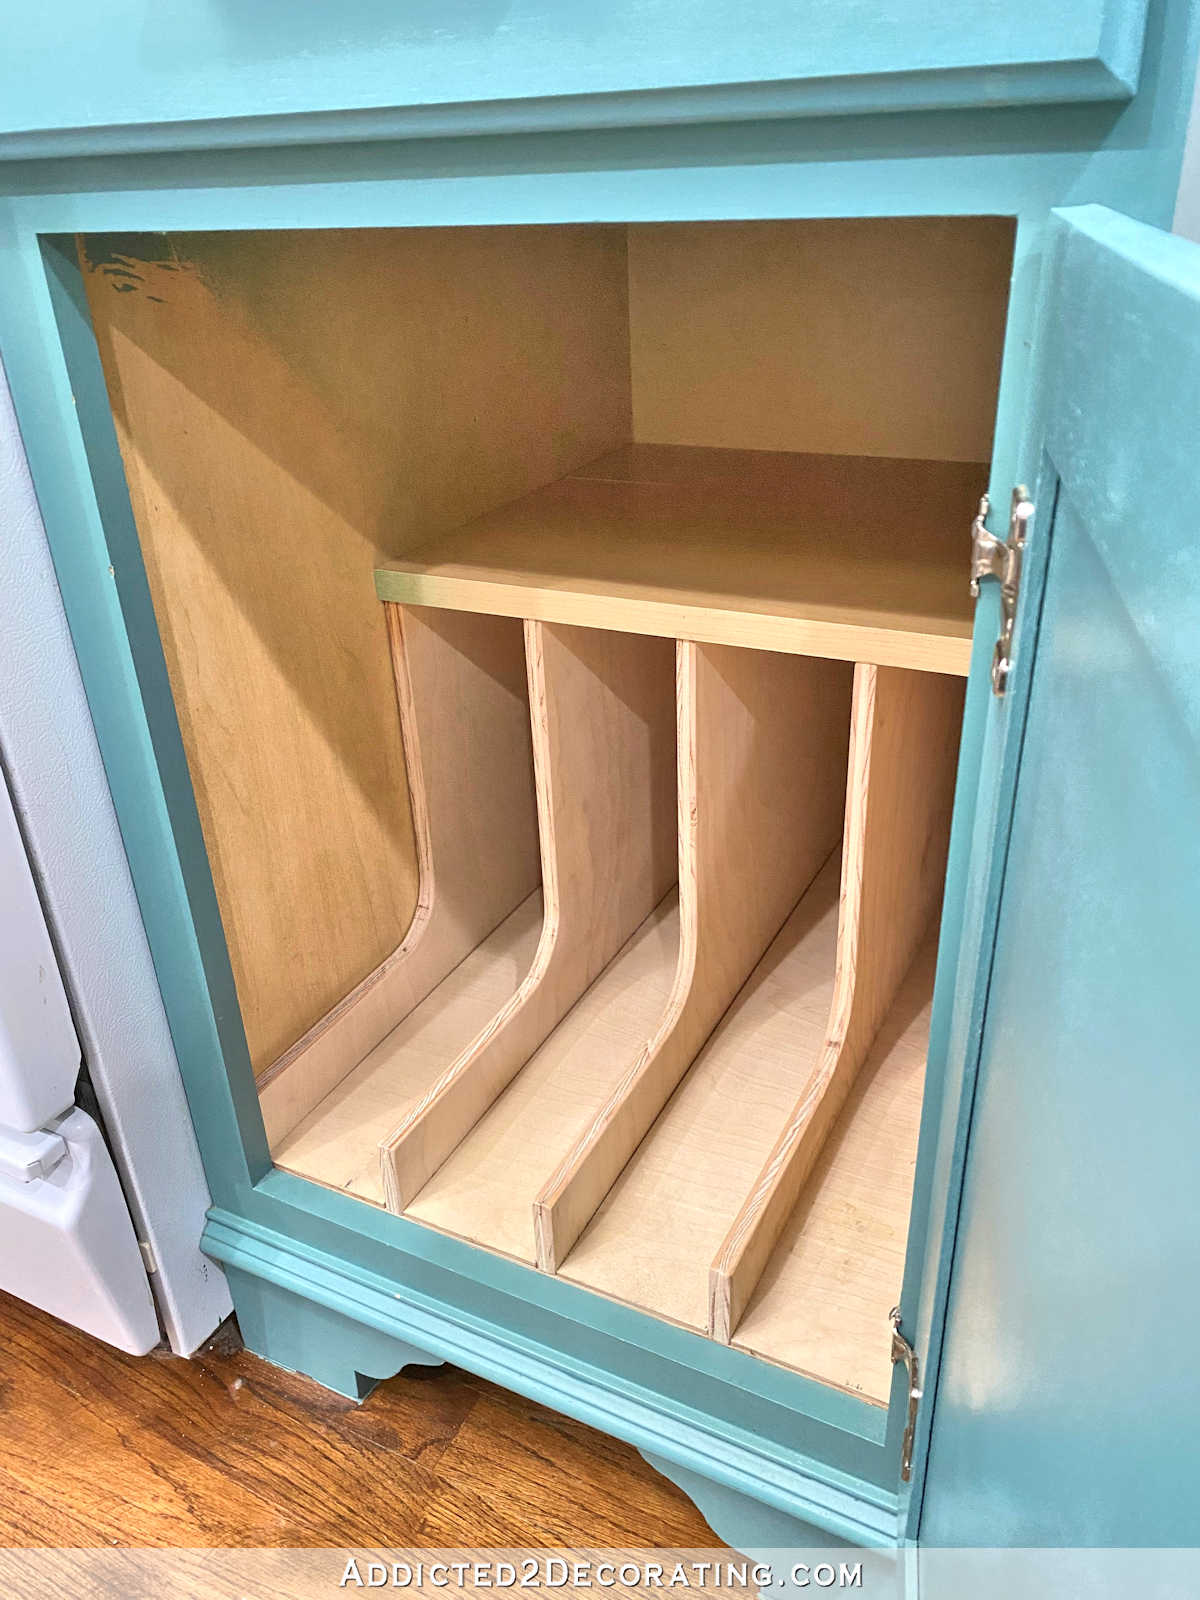 DIY skillet and lid organizer fully assembled inside kitchen cabinet